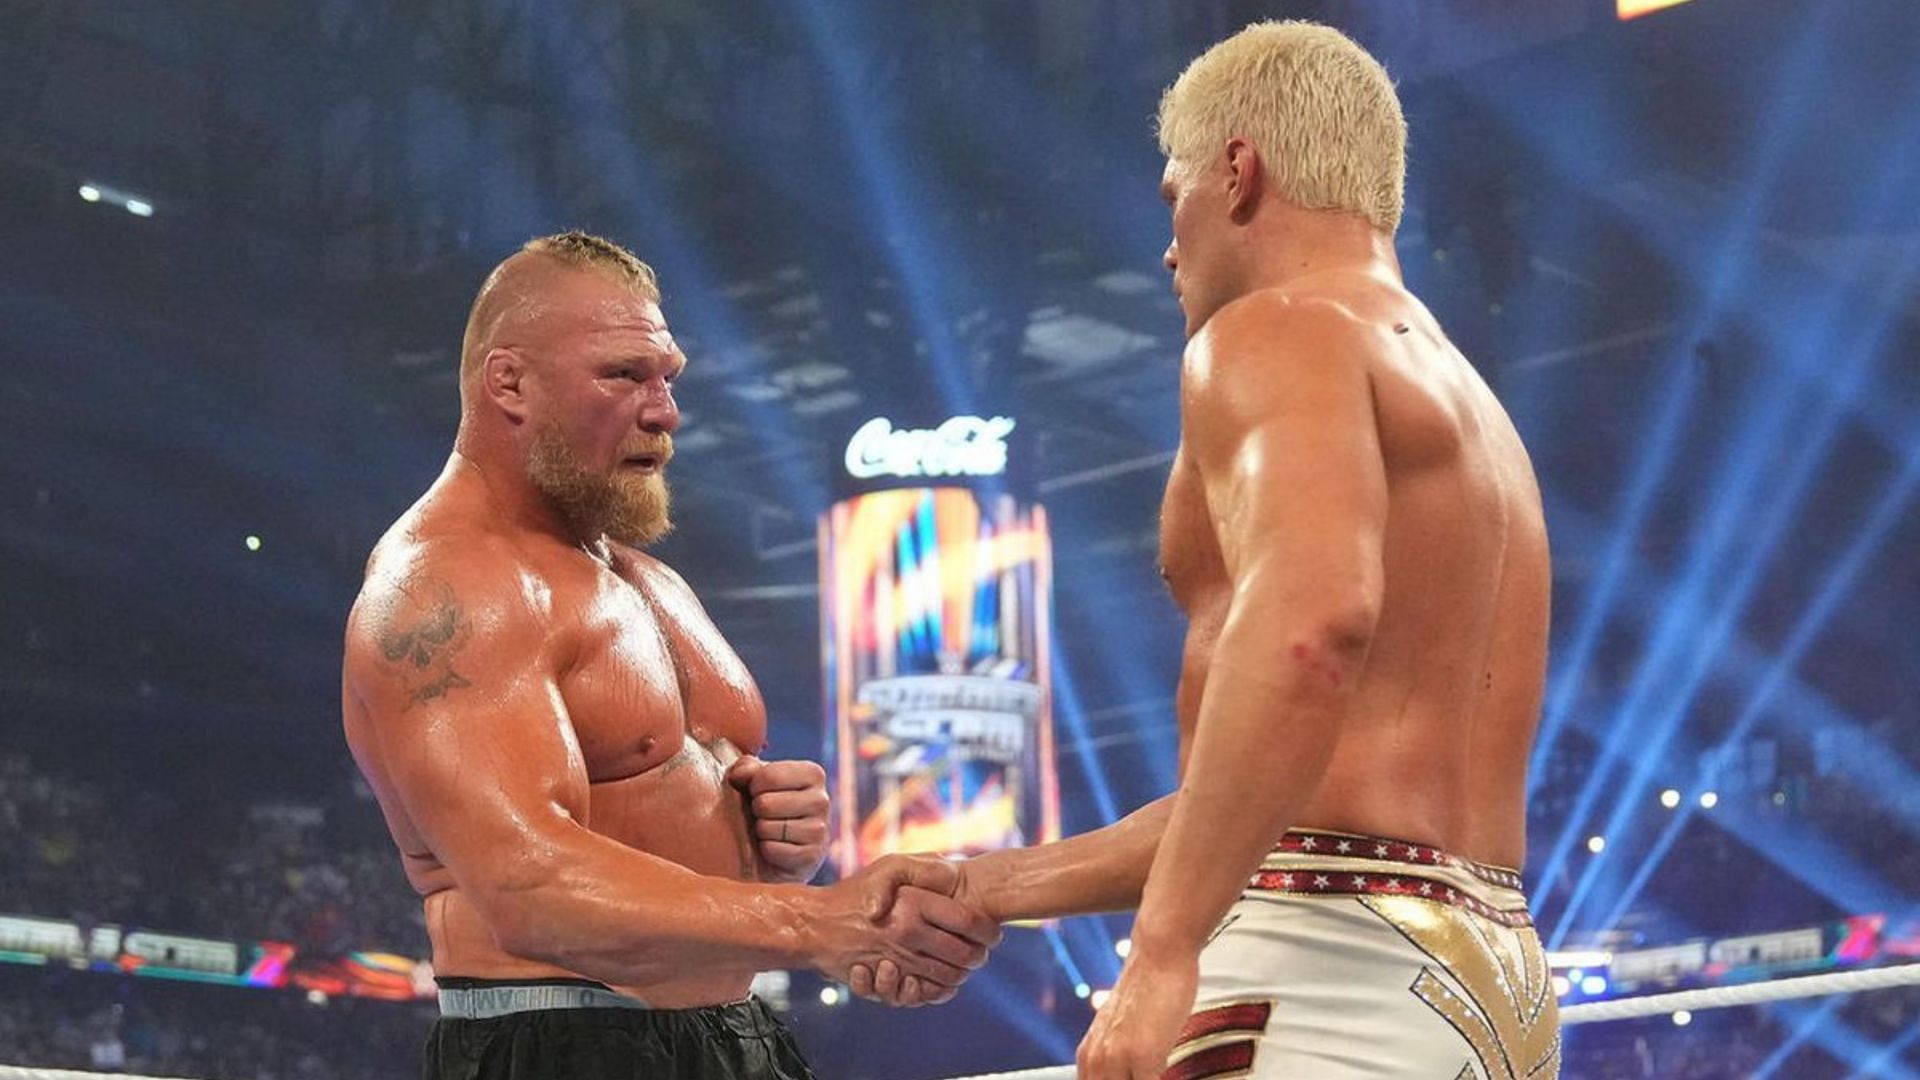 Cody Rhodes defeated Brock Lesnar at WWE SummerSlam